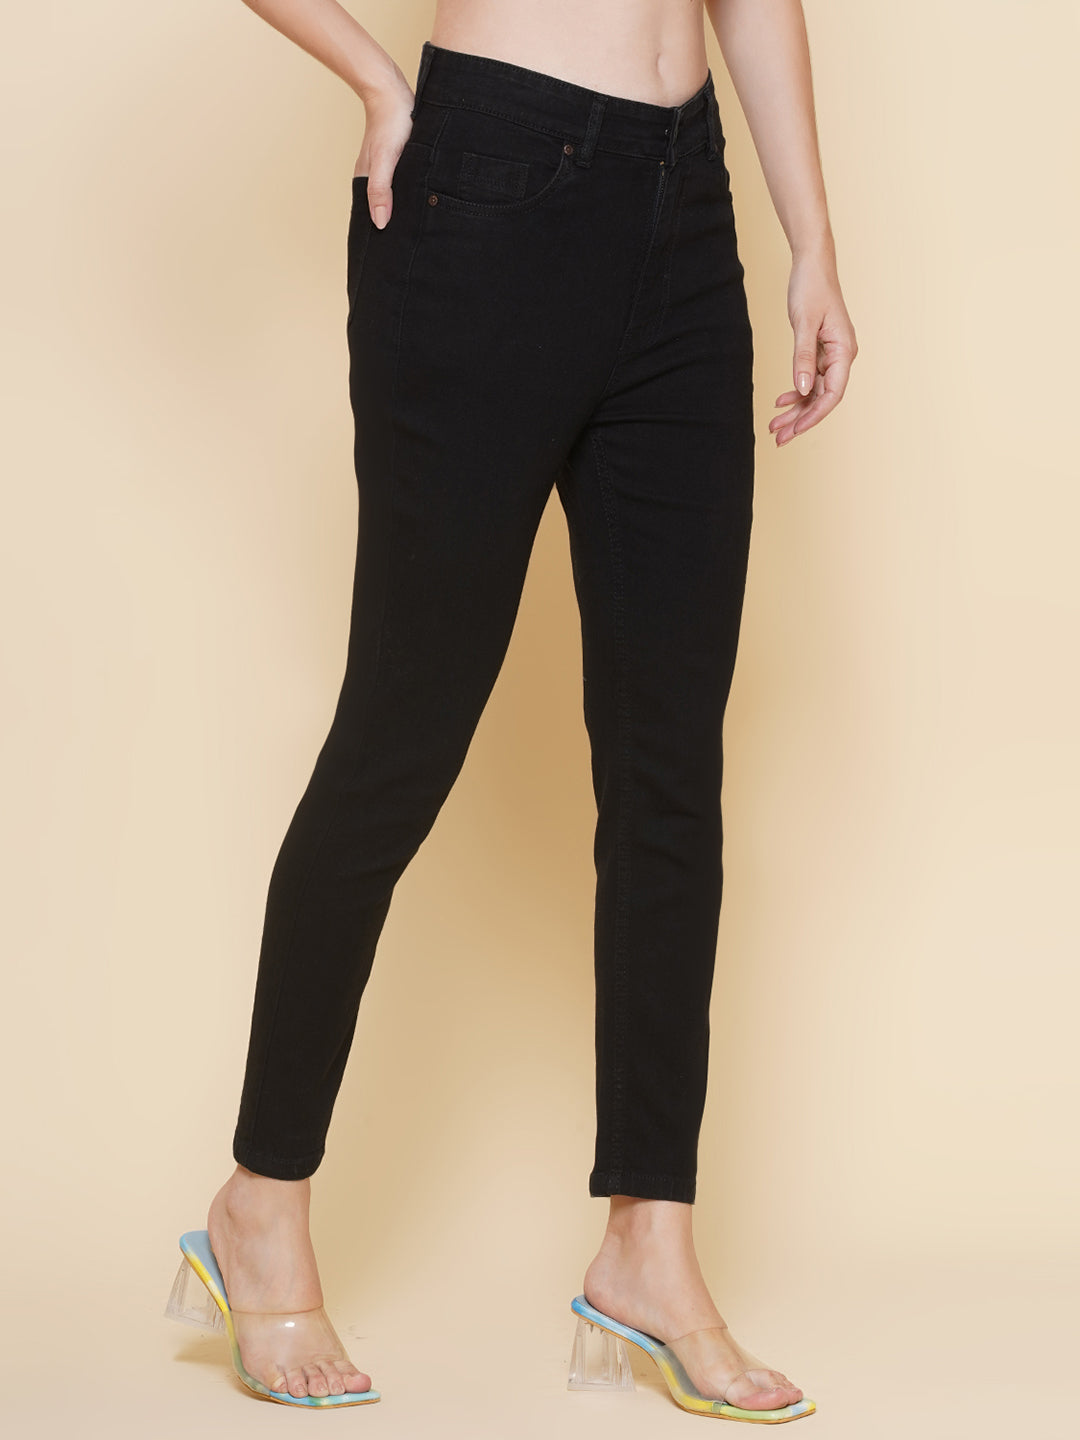 Women's Slim Fit Black Jeans